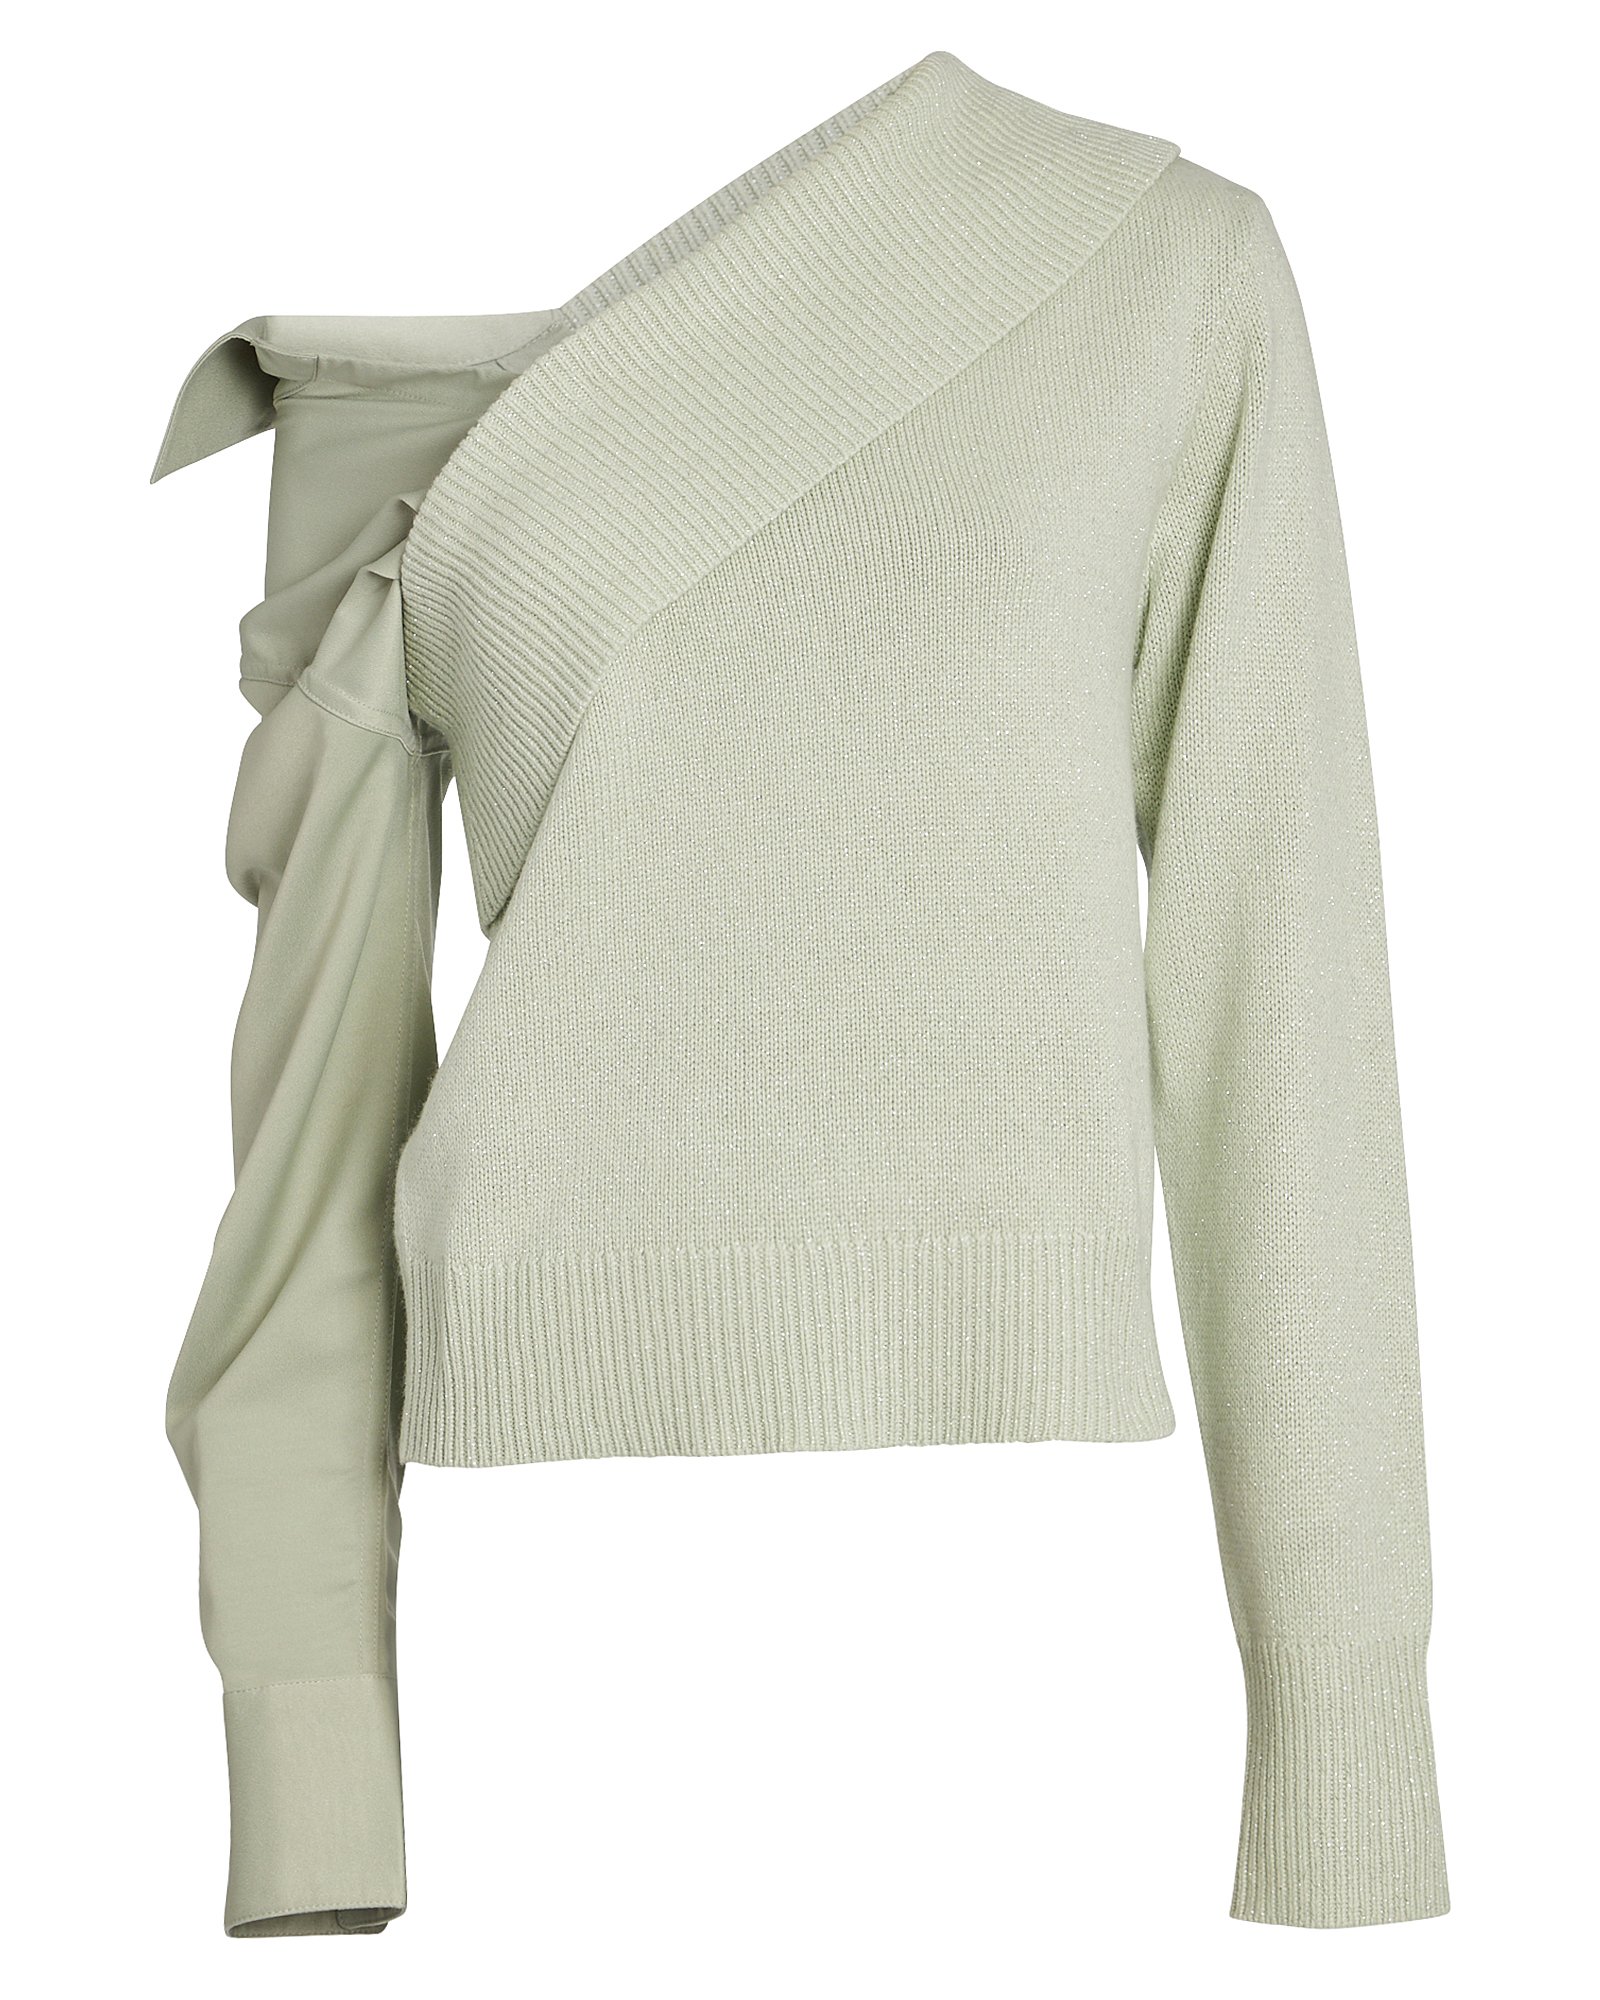 Hellessy | Joffe Satin Sleeve Sweater | INTERMIX®